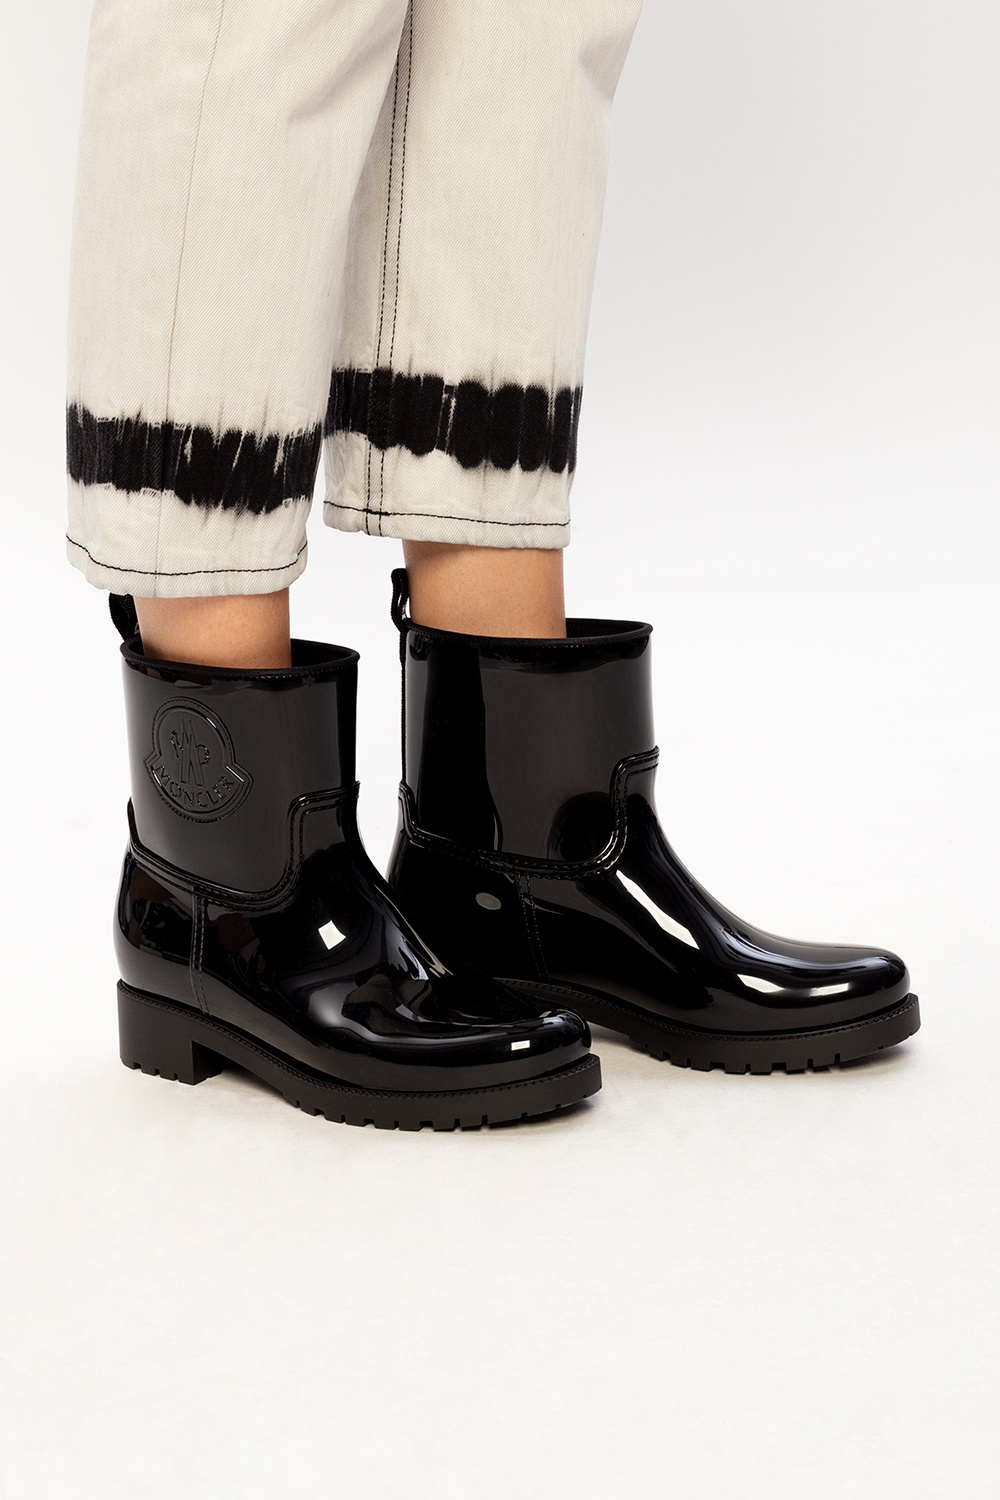 moncler ginette rain boots